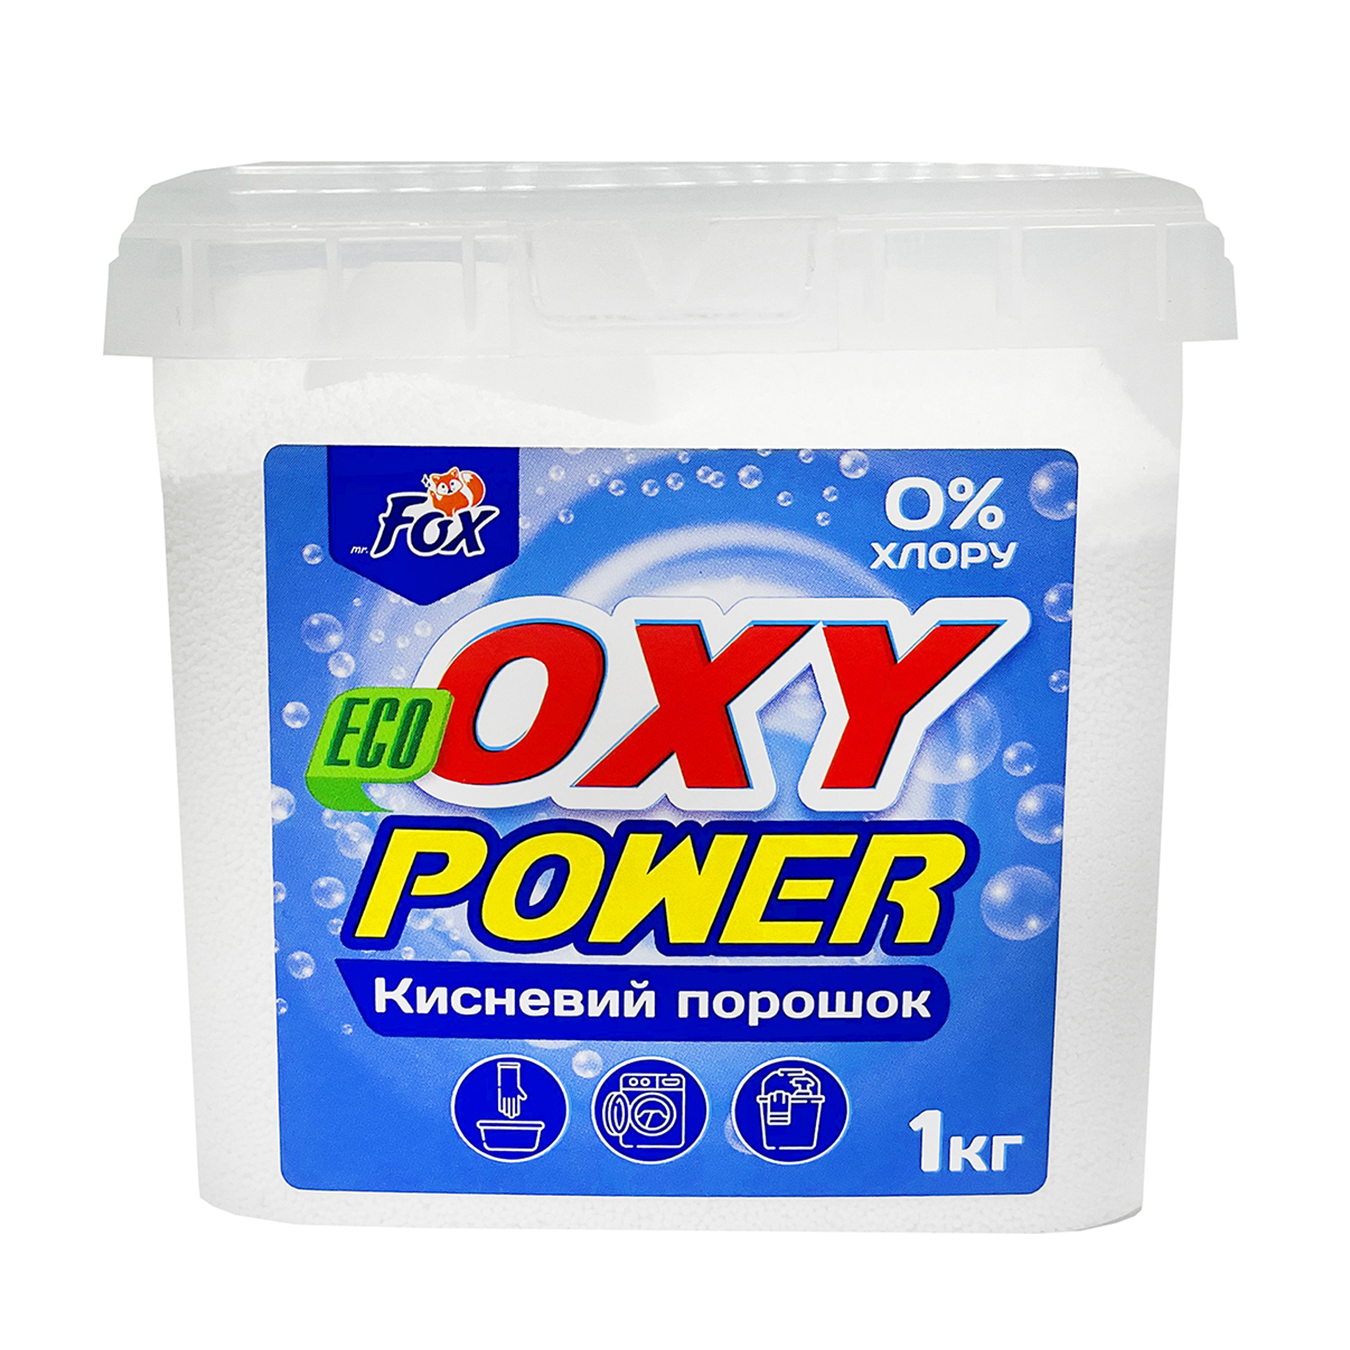 Oxygen washing powder Fox Oxy Power 1kg